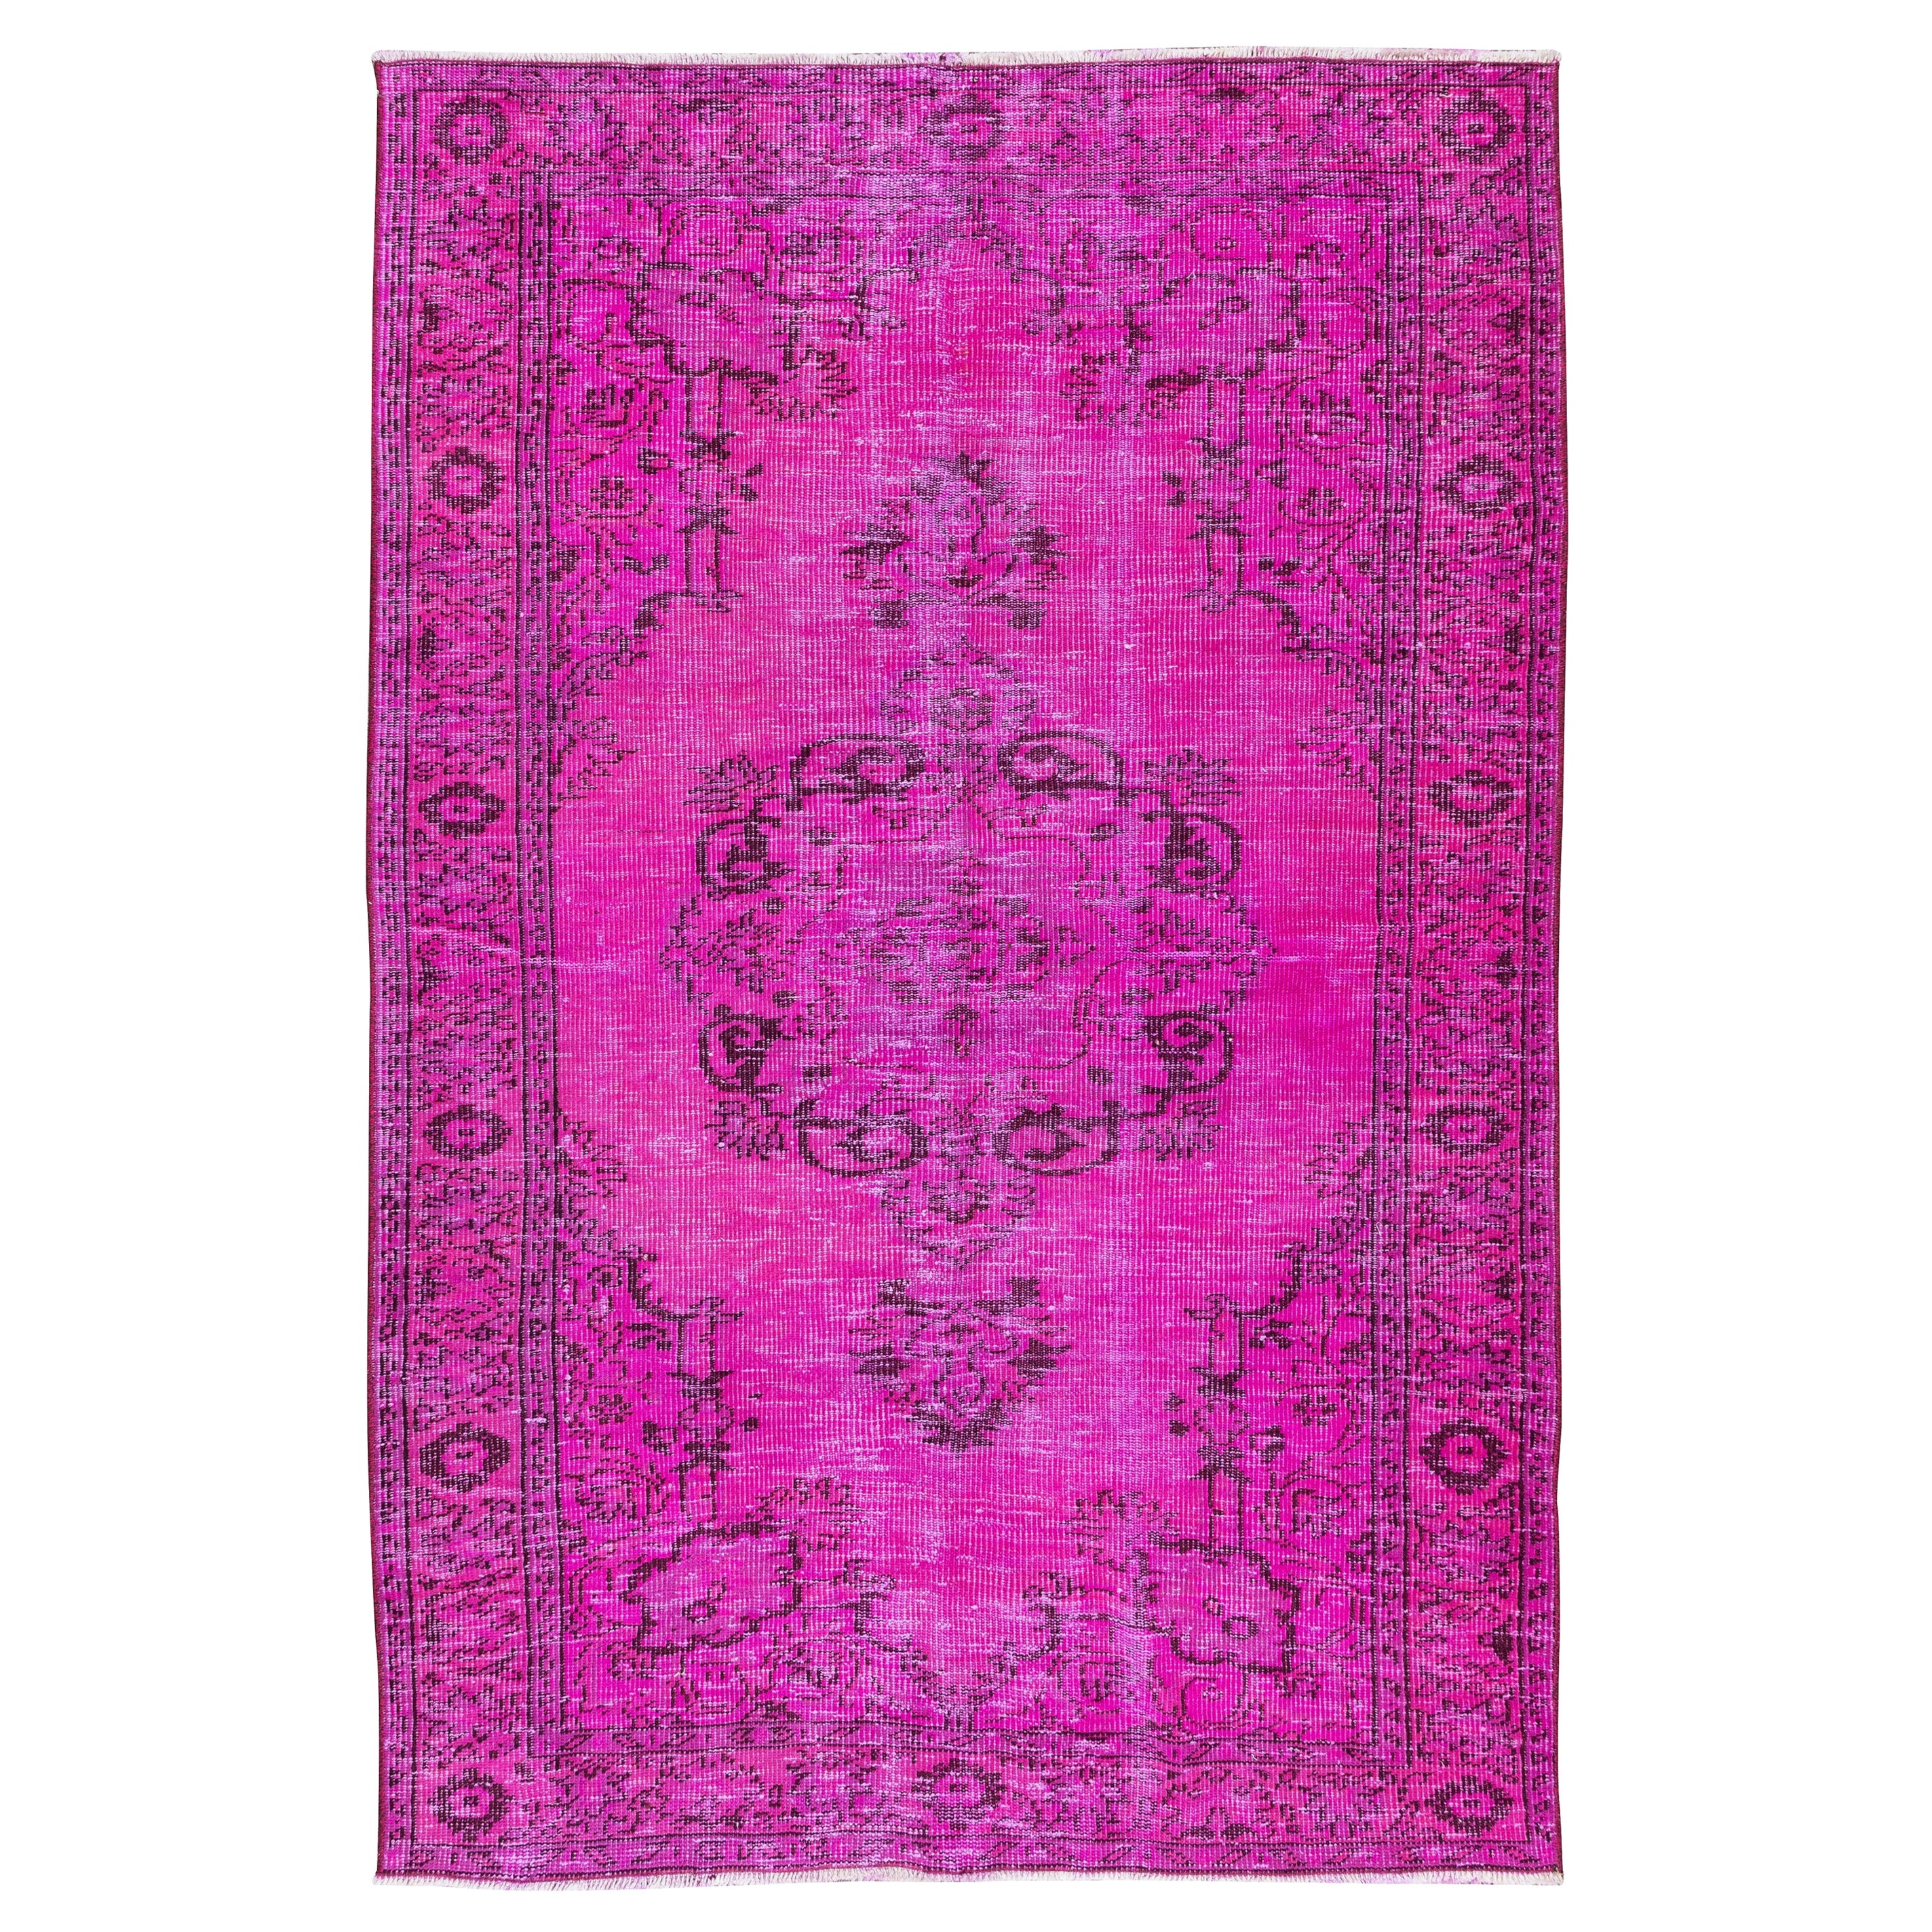 5x7.8 Ft Handmade Turkish Carpet, Fuchsia Pink Area Rug, Woolen Floor Covering